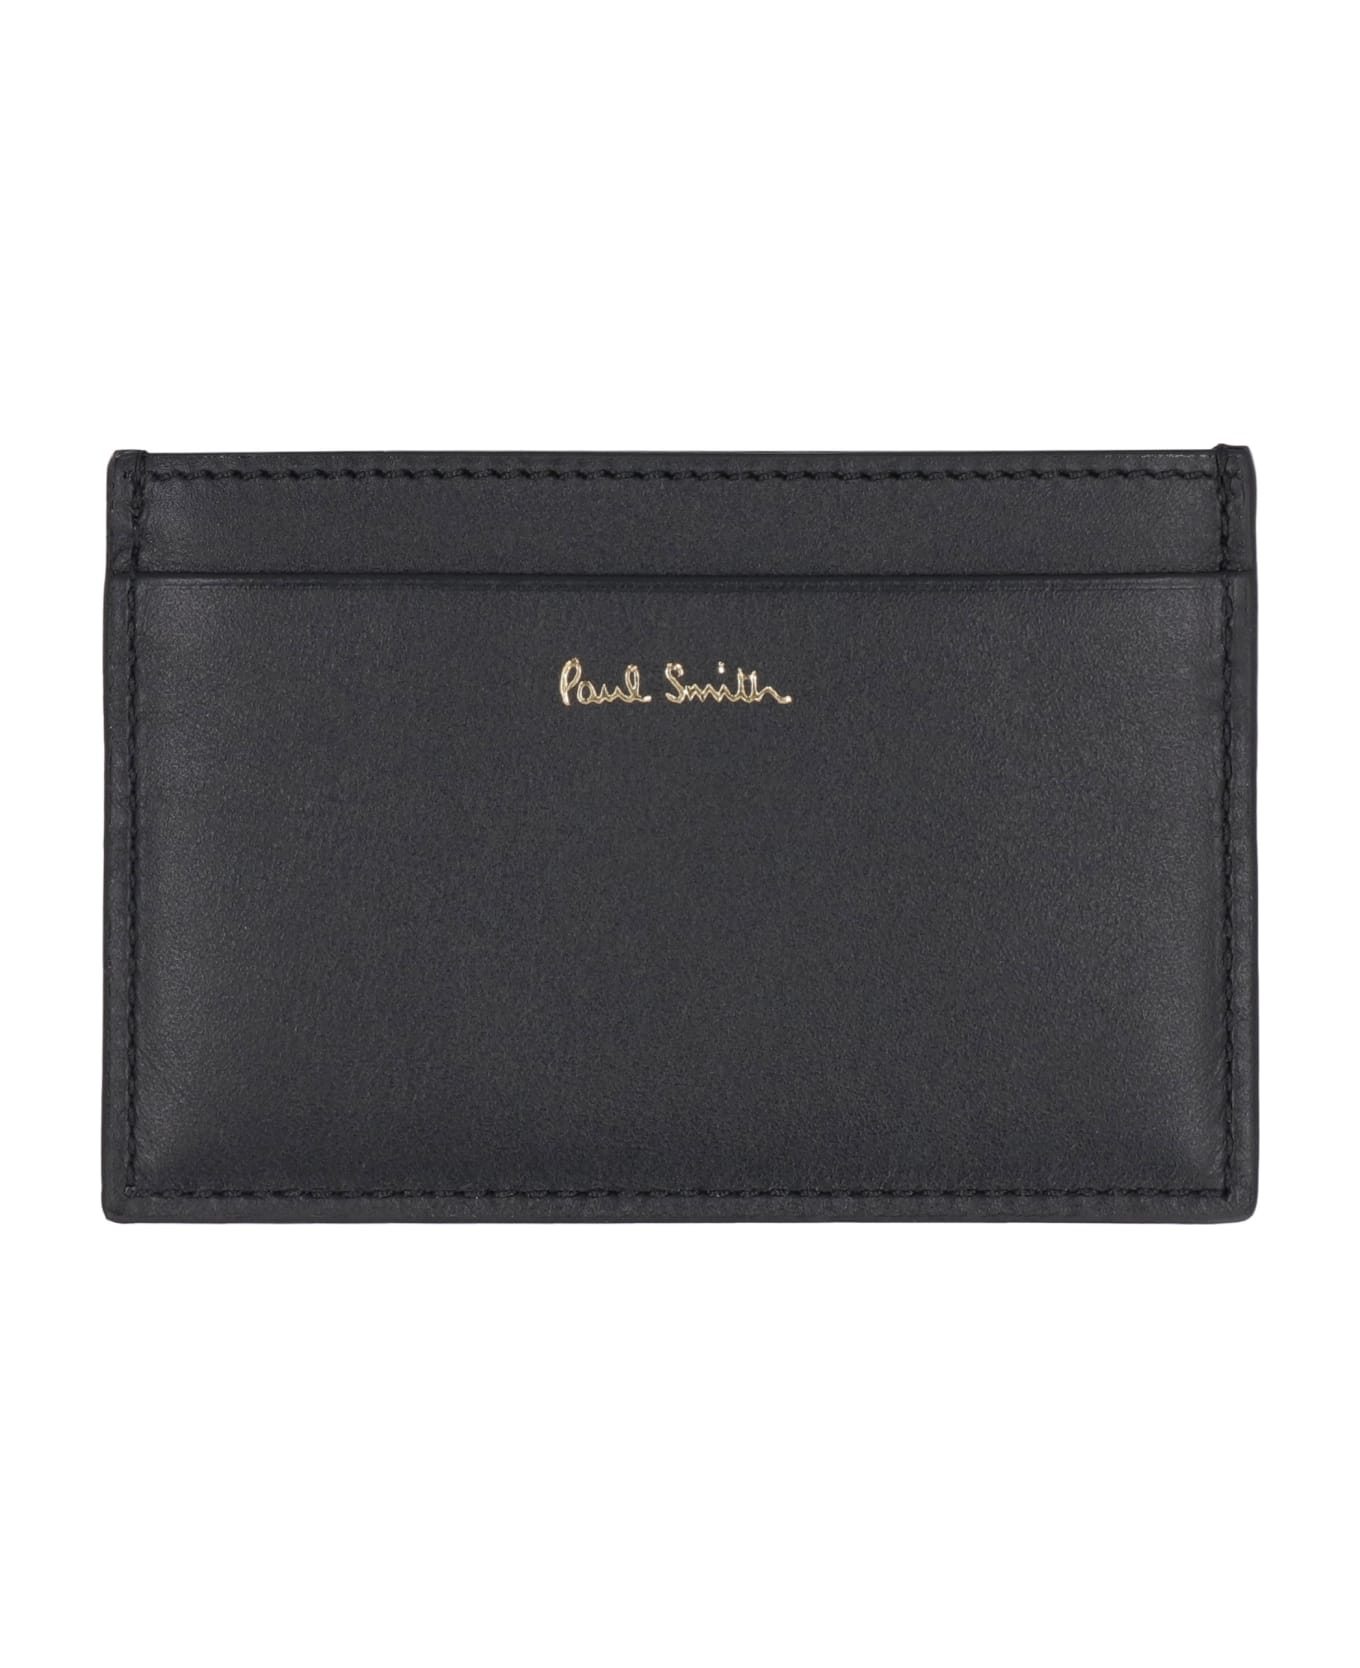 Paul Smith Leather Card Holder - black